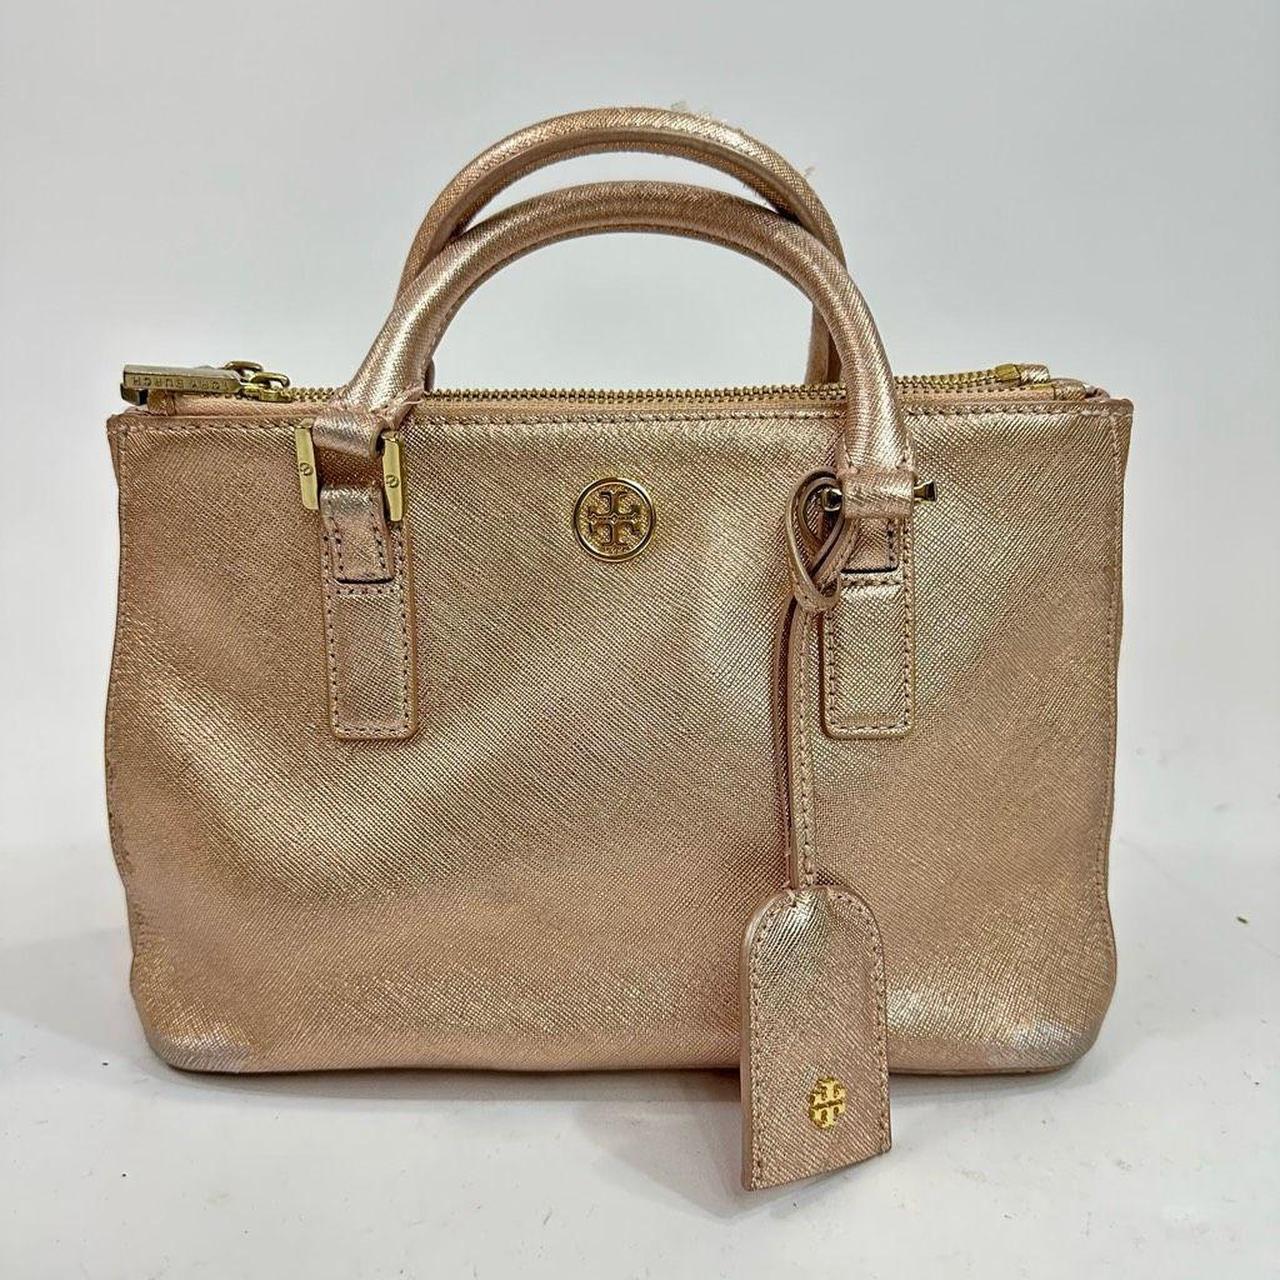 Tory Burch 'Robinson' tote bag, Women's Bags